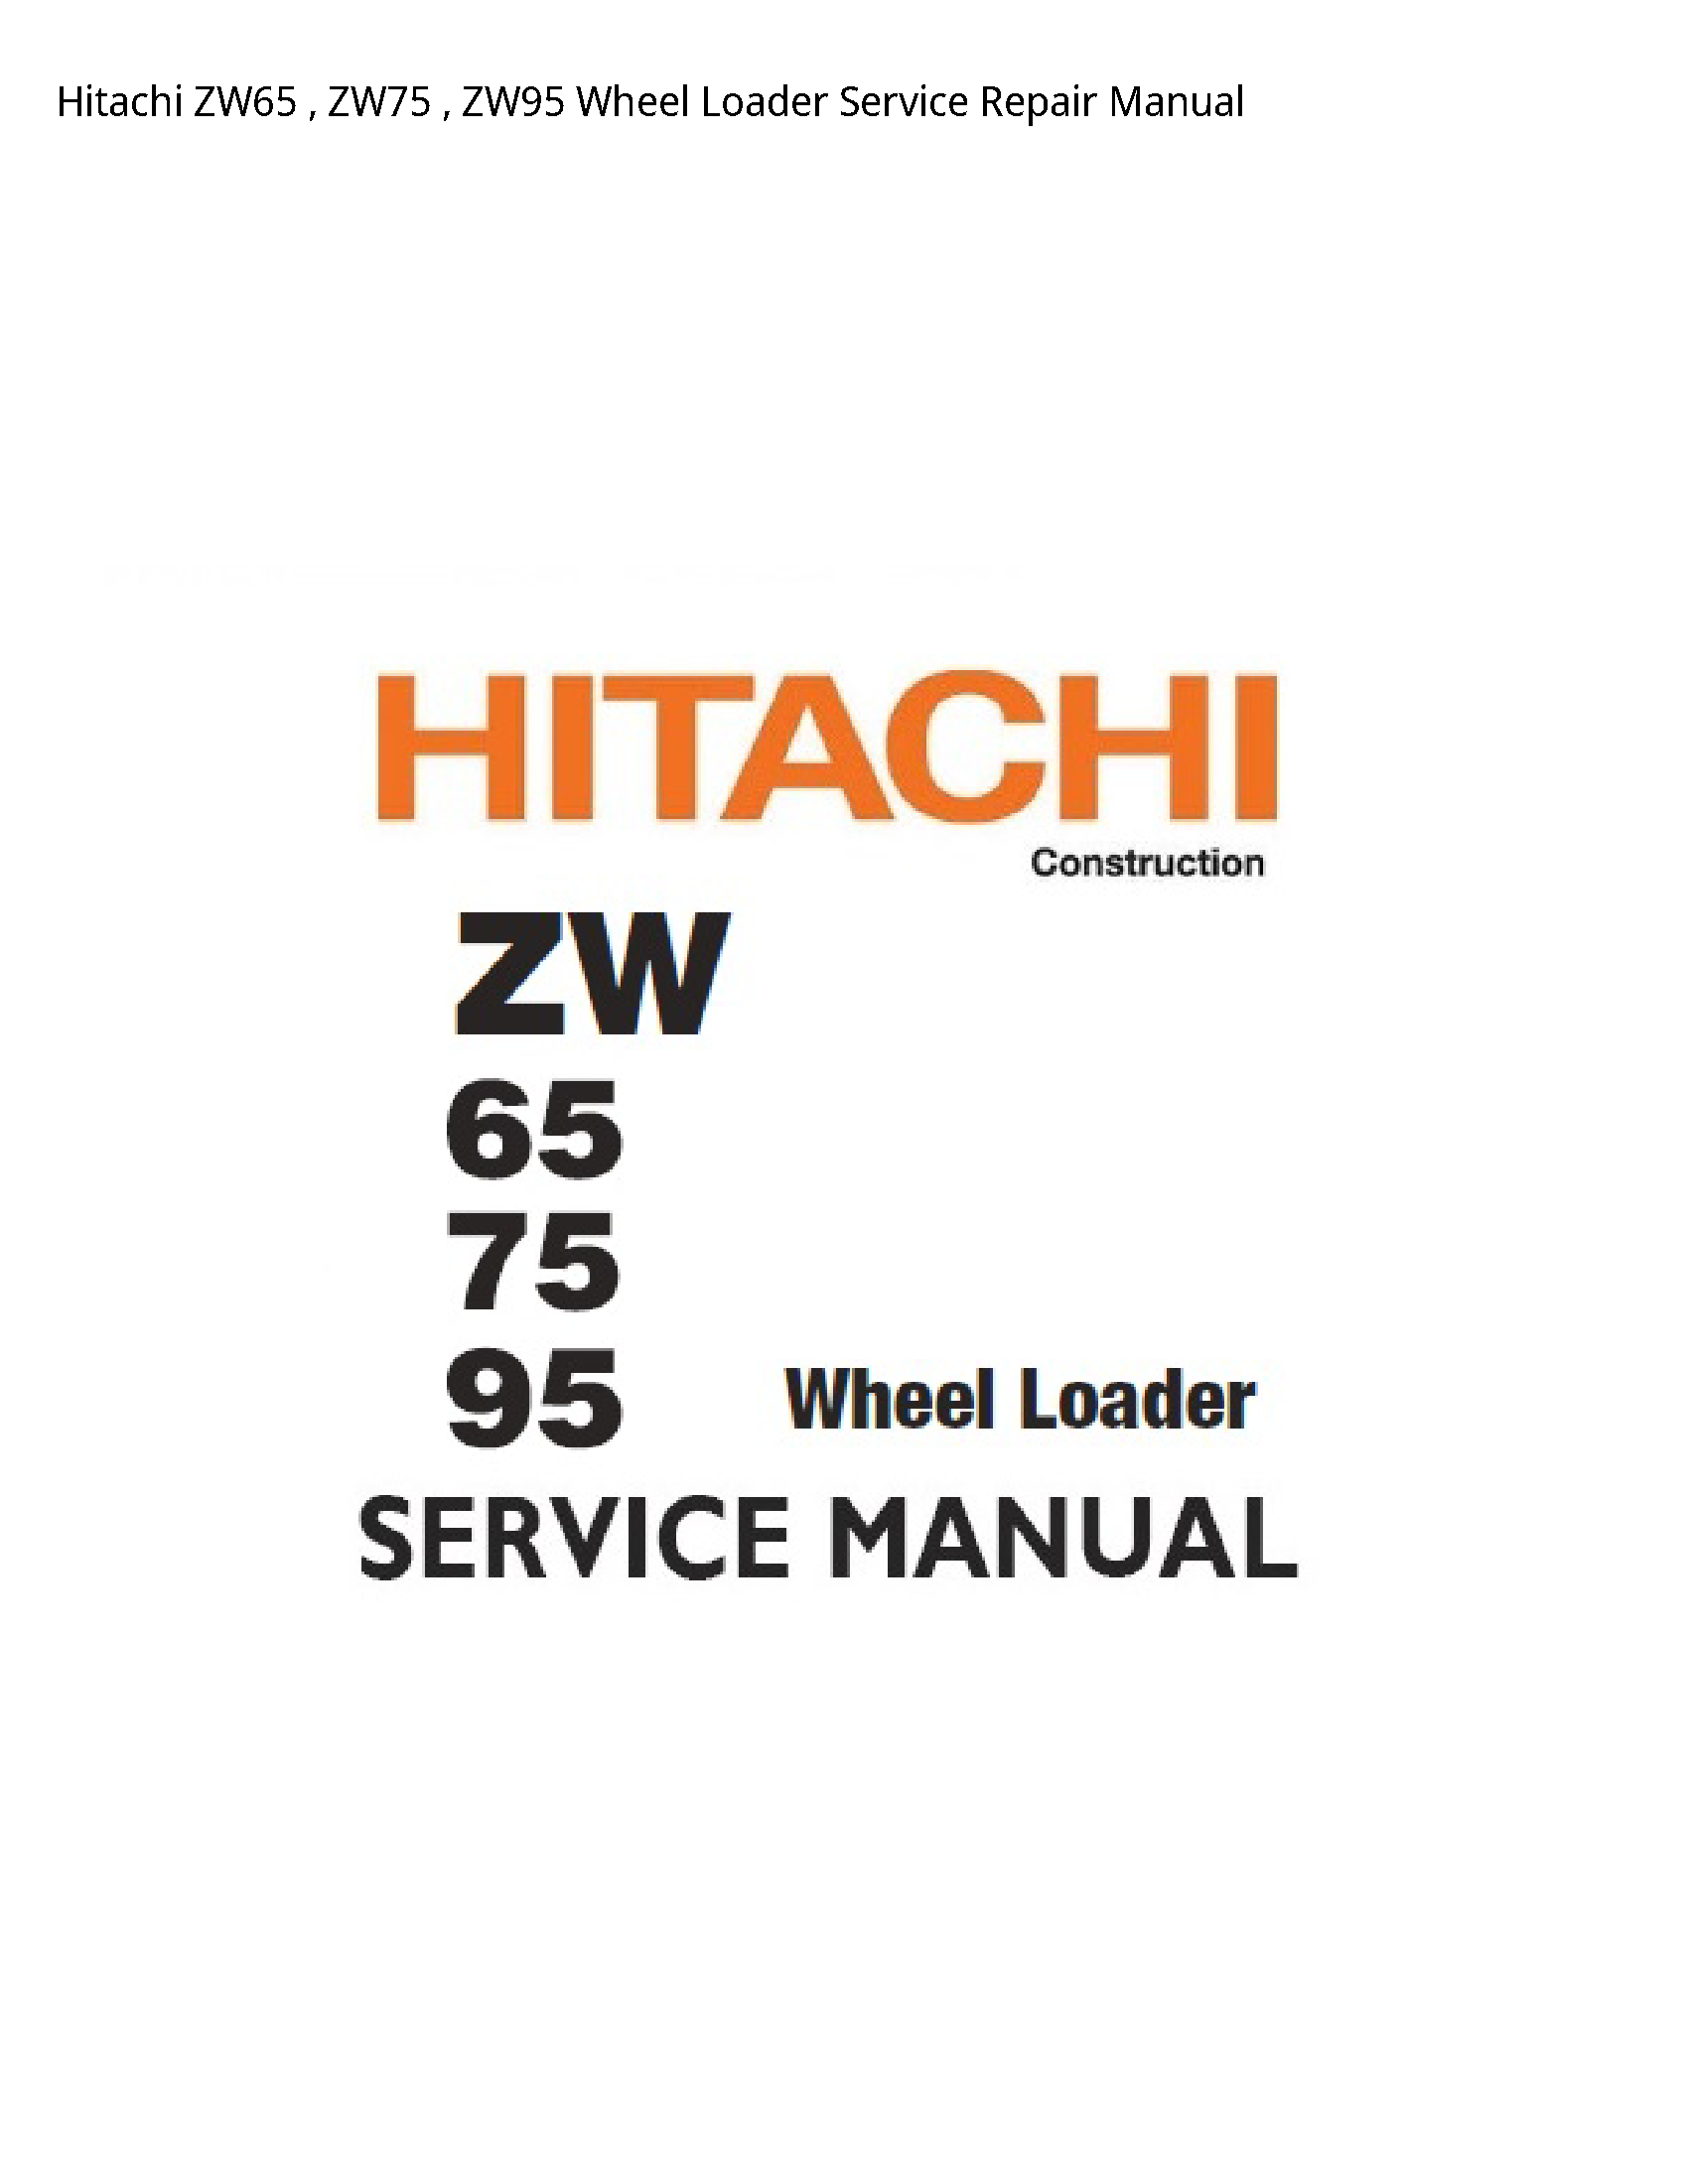 Hitachi ZW65 Wheel Loader manual